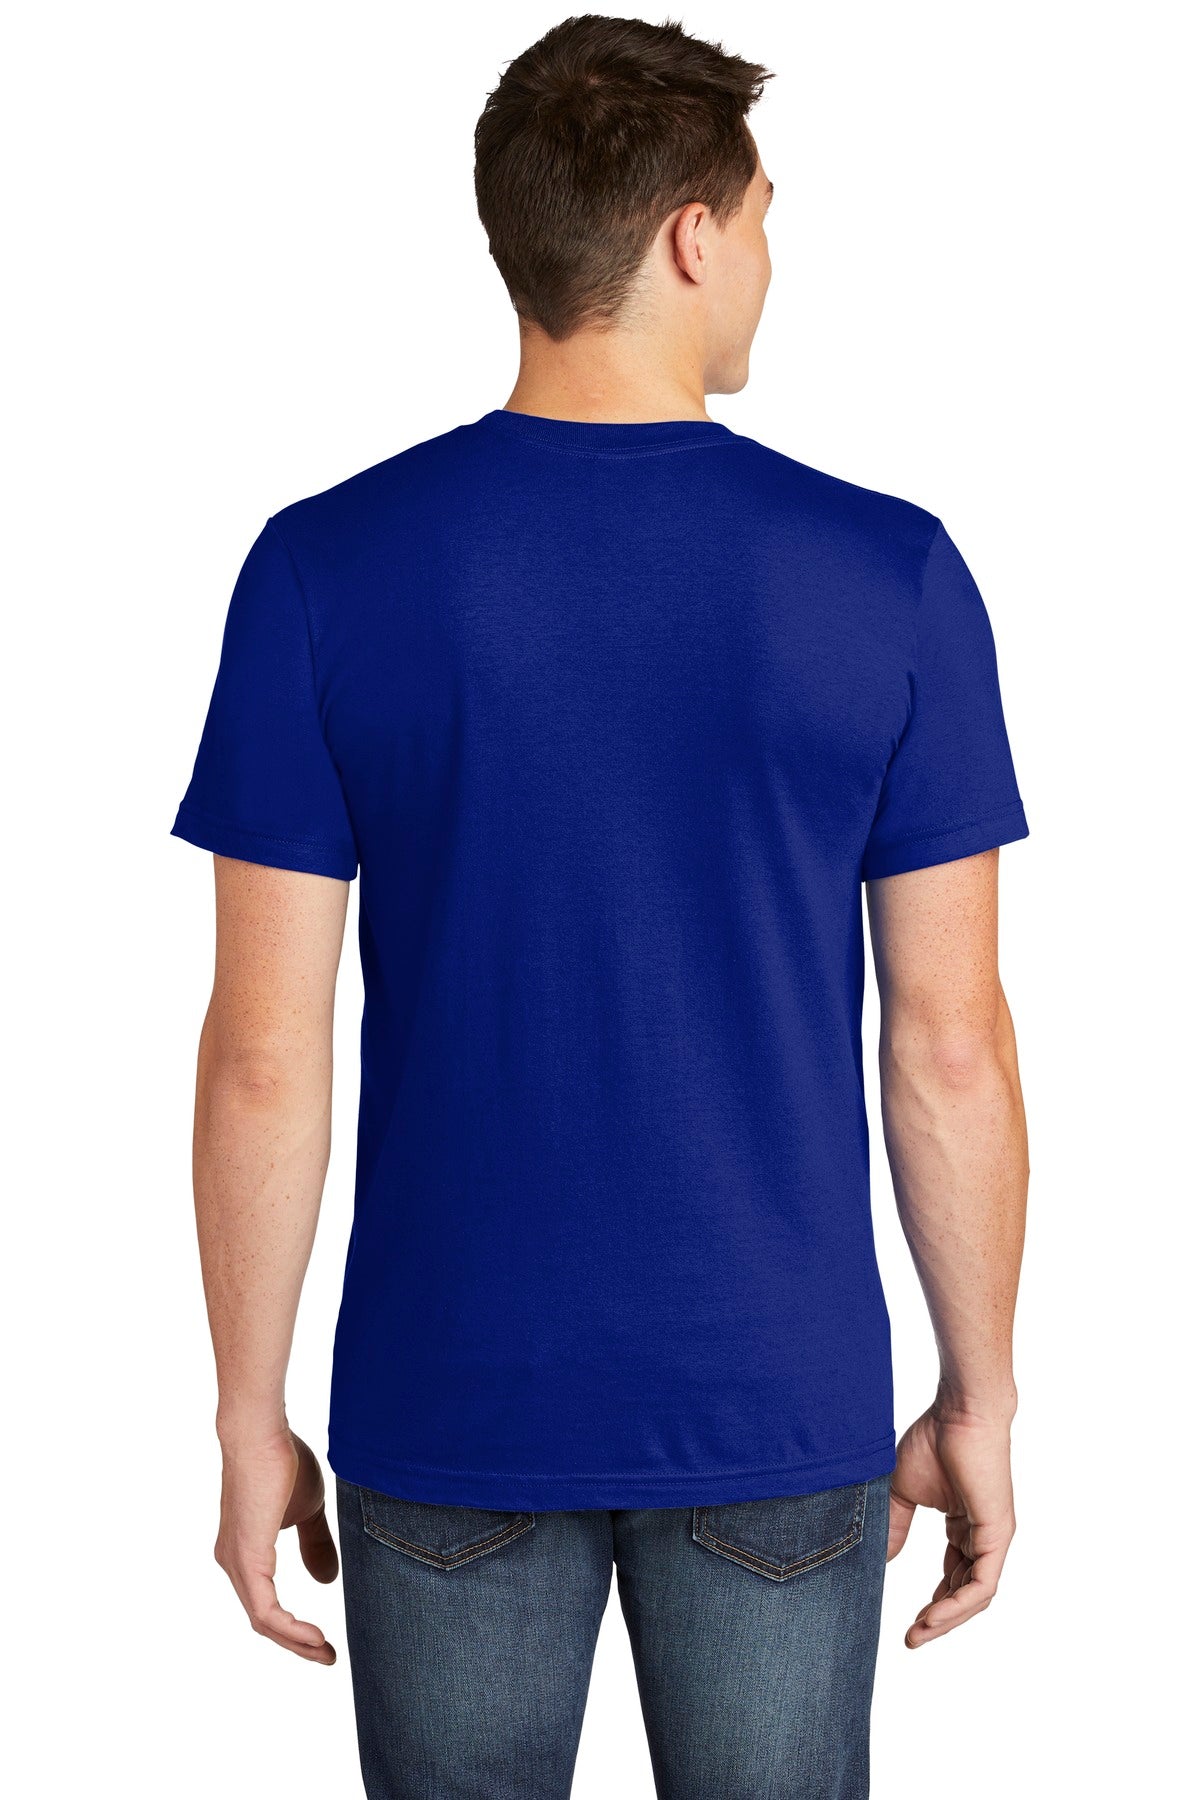 American Apparel ® Fine Jersey T-Shirt. 2001W [Lapis] - DFW Impression